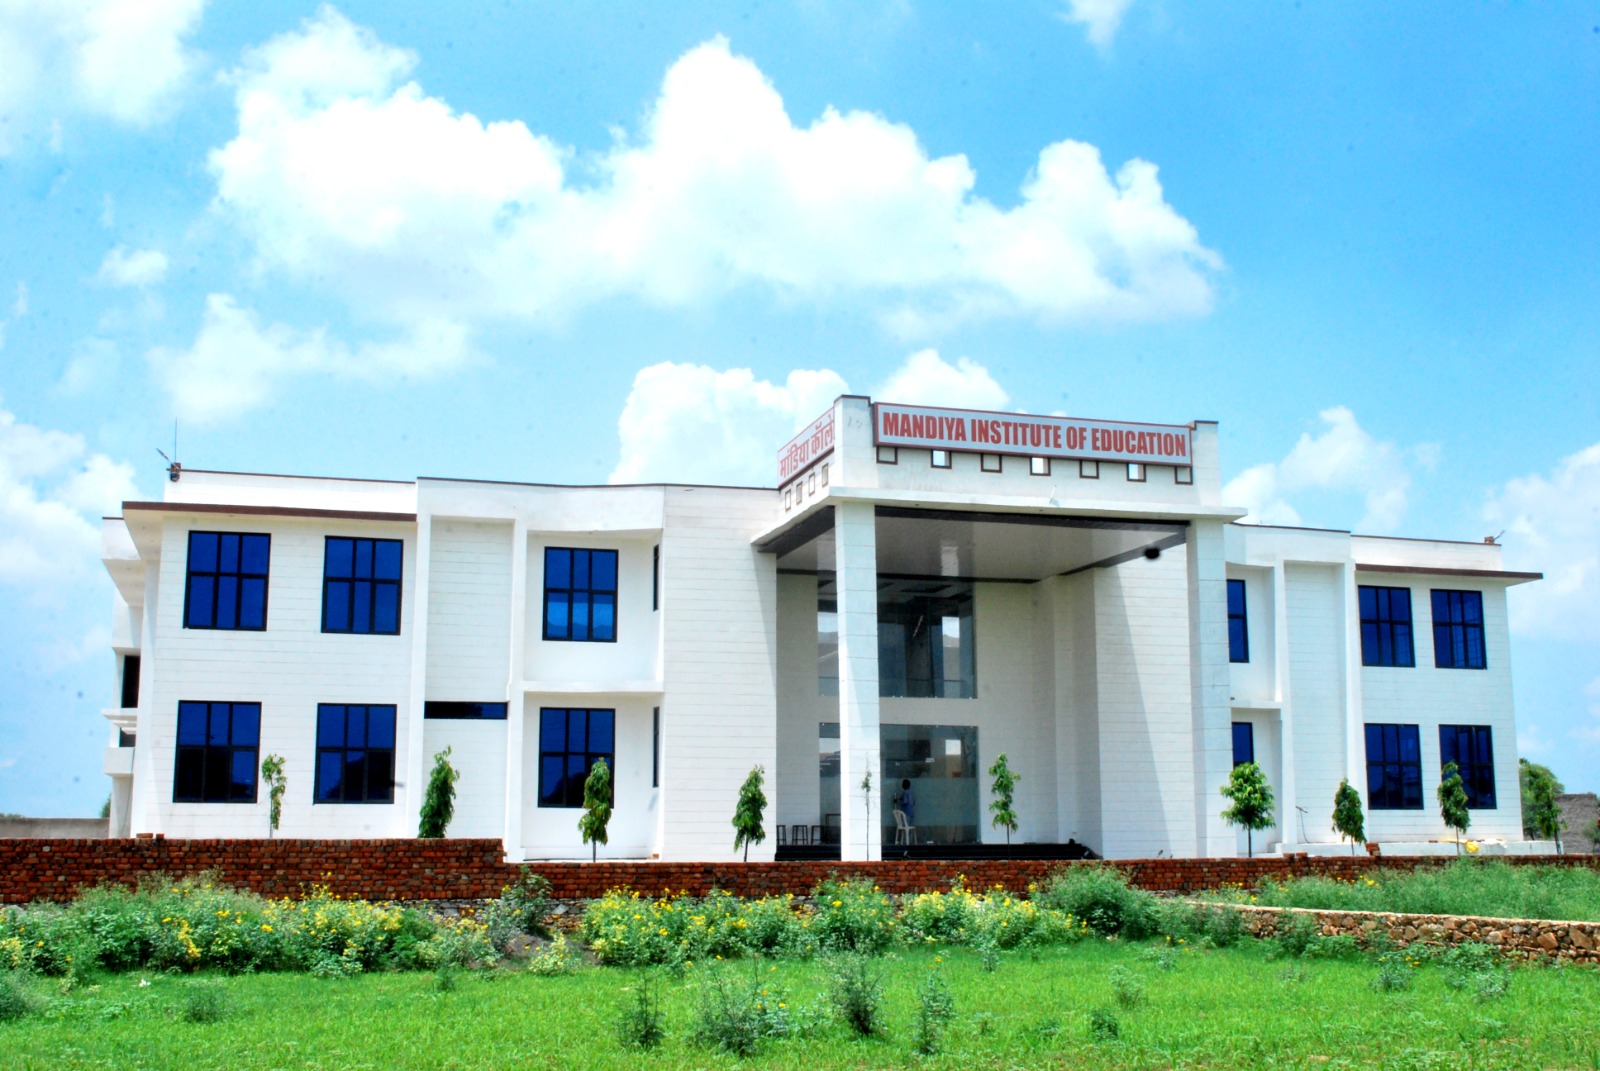 Mandiya College